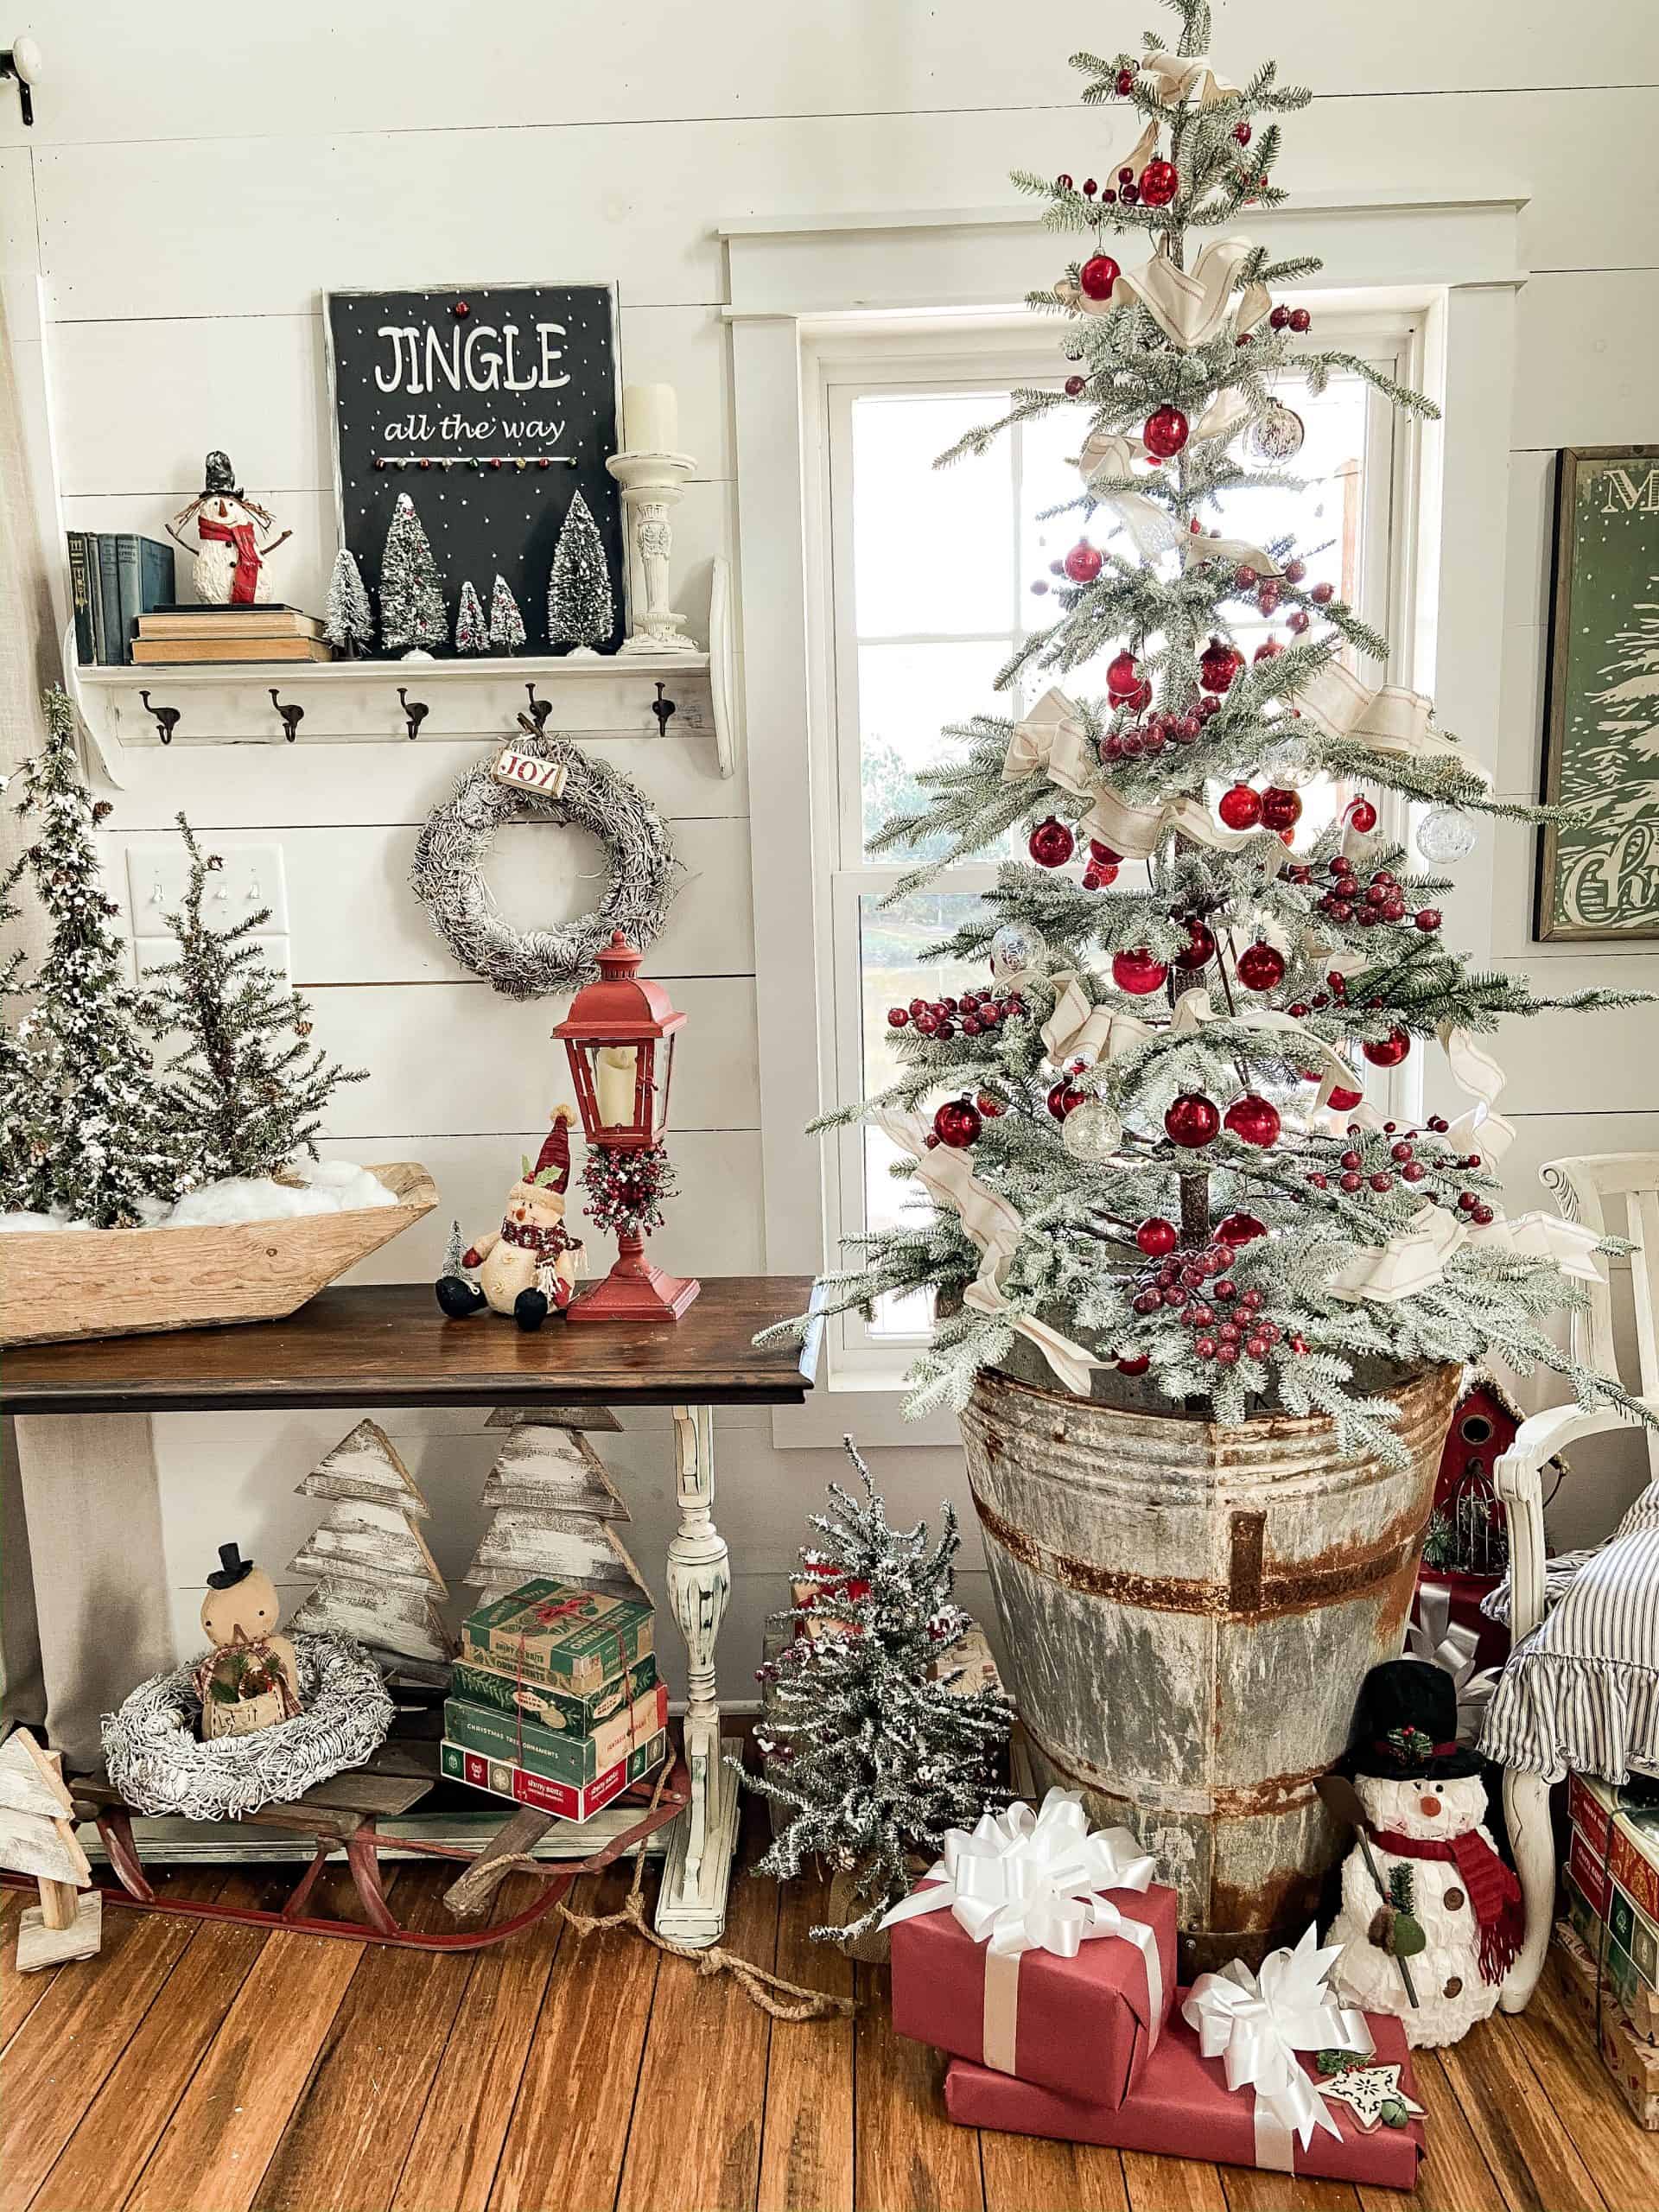 Festive Christmas Kitchen Decor Ideas - Festive Decorating Tips